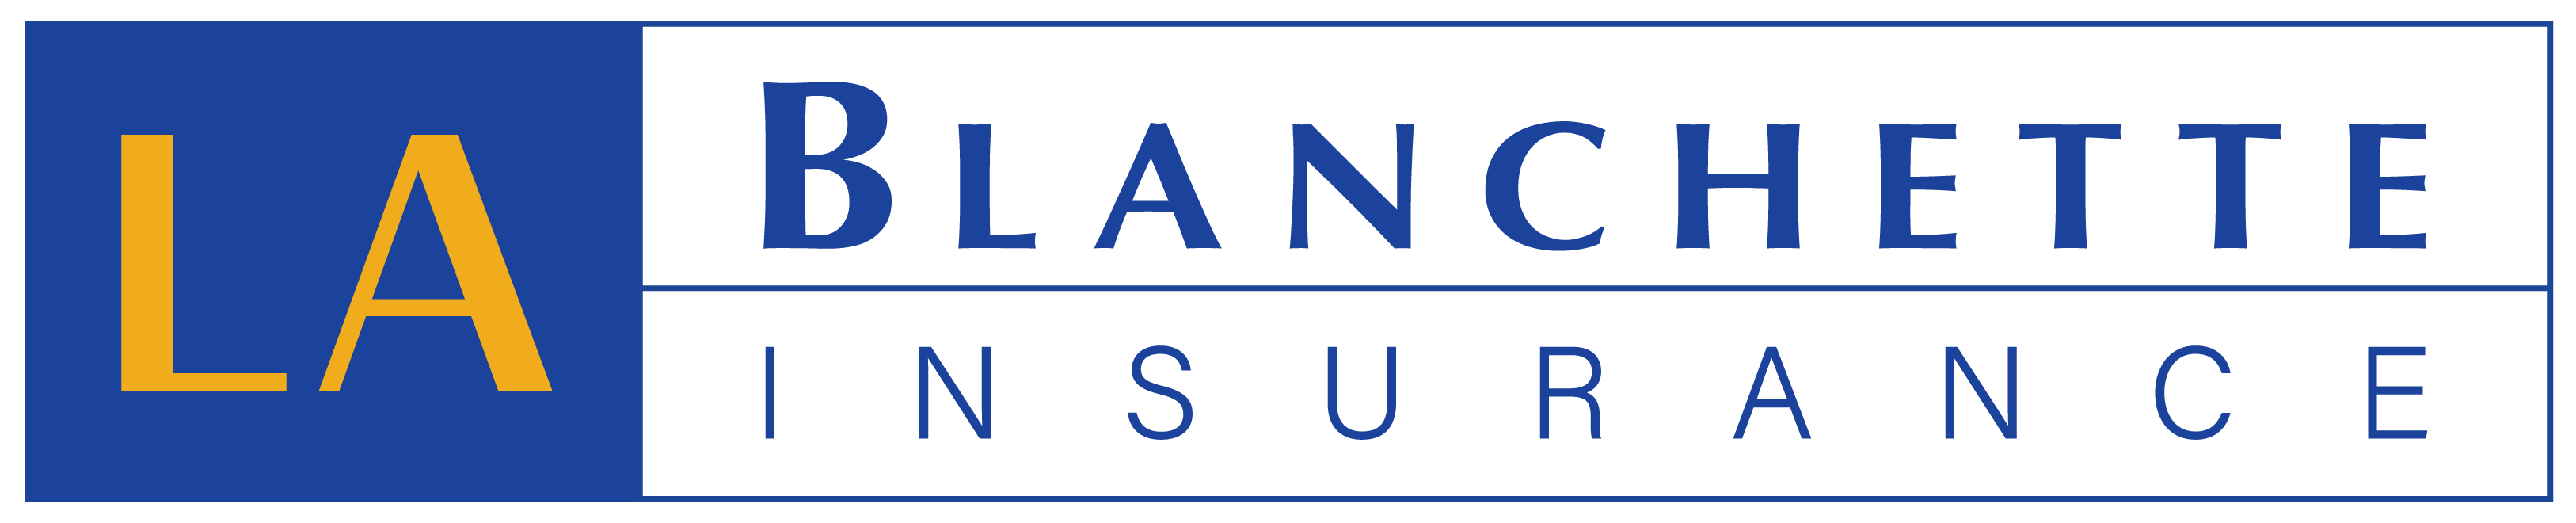 LA Blanchette Insurance